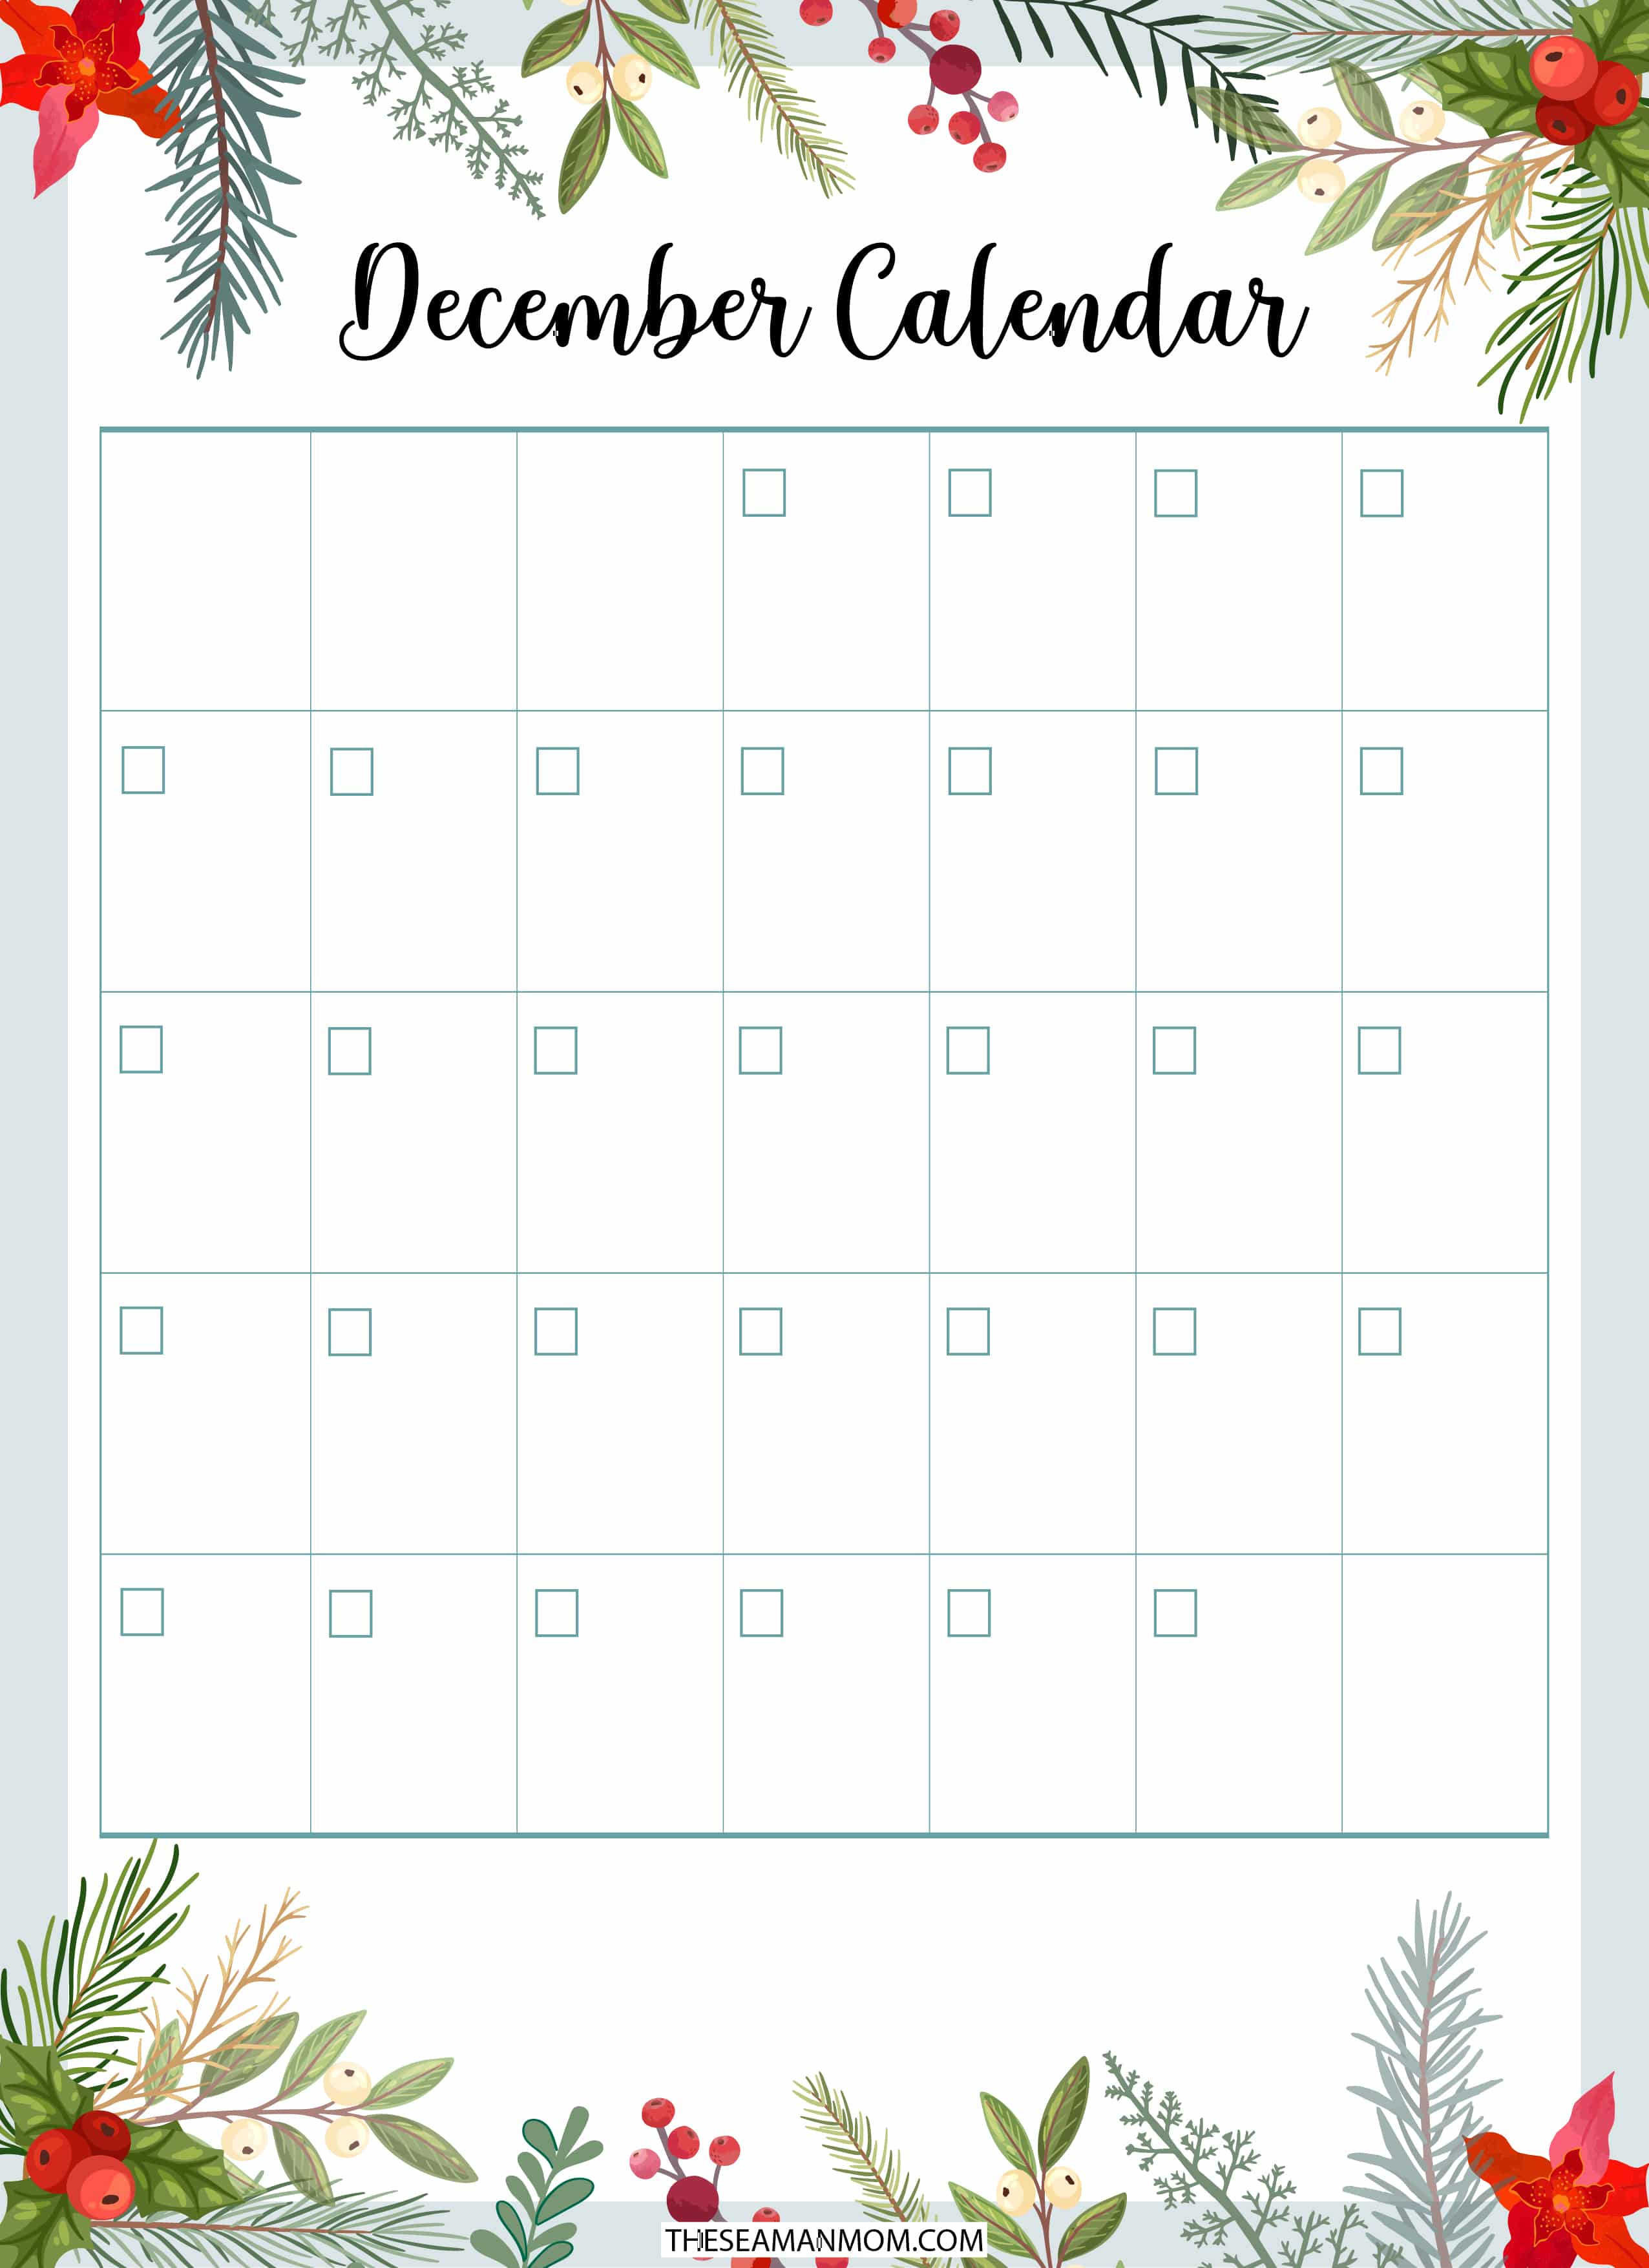 Image of printable December calendar